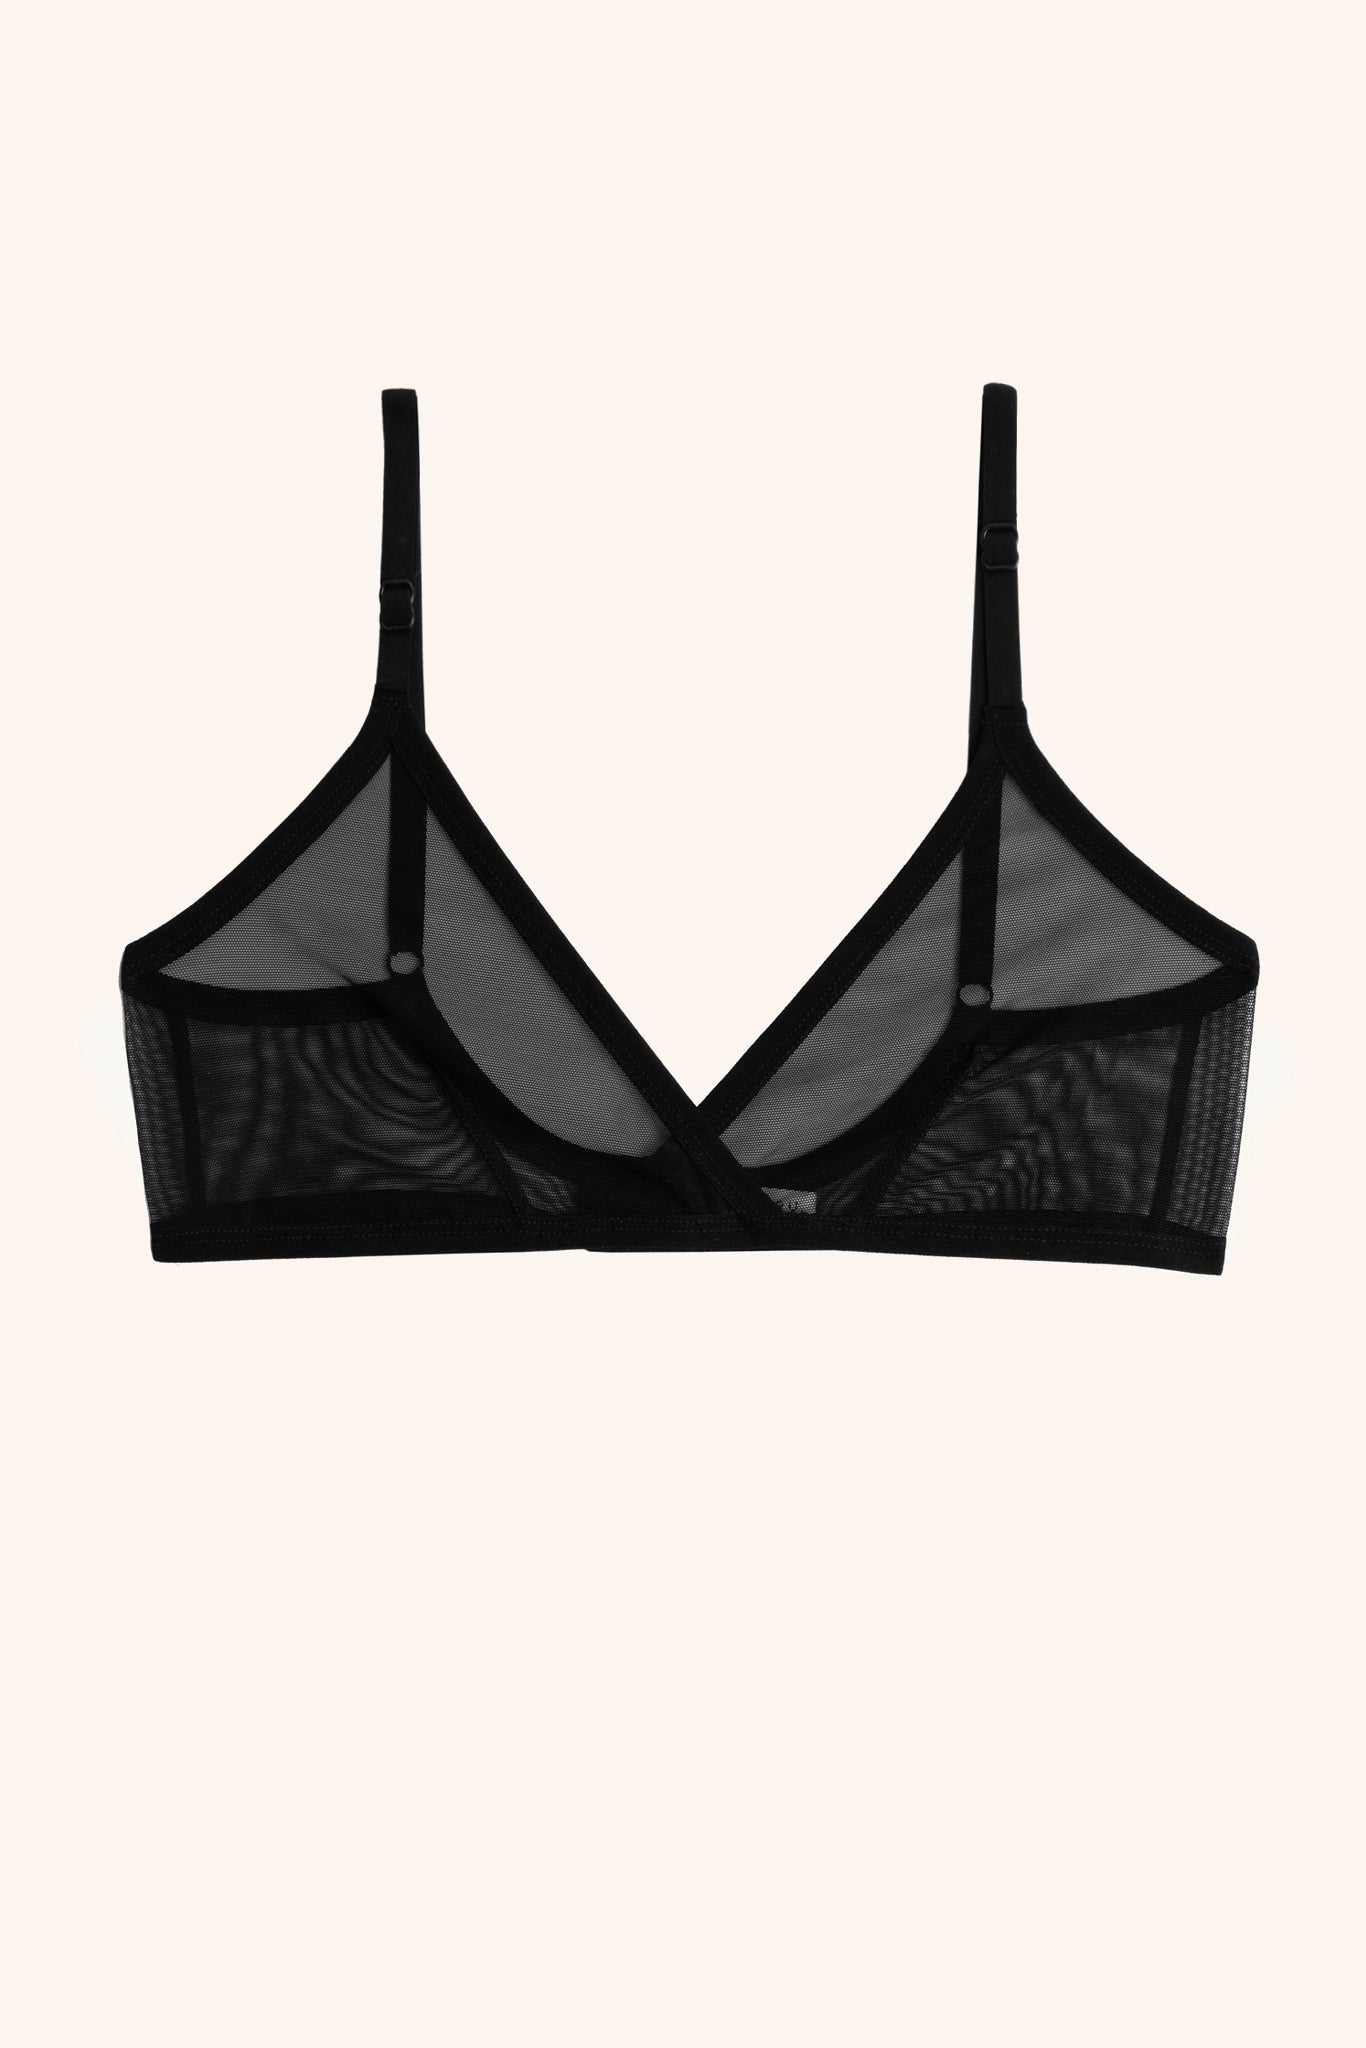 Body Intimates Ultimate Comfort Lace Triangle Bralette - Black